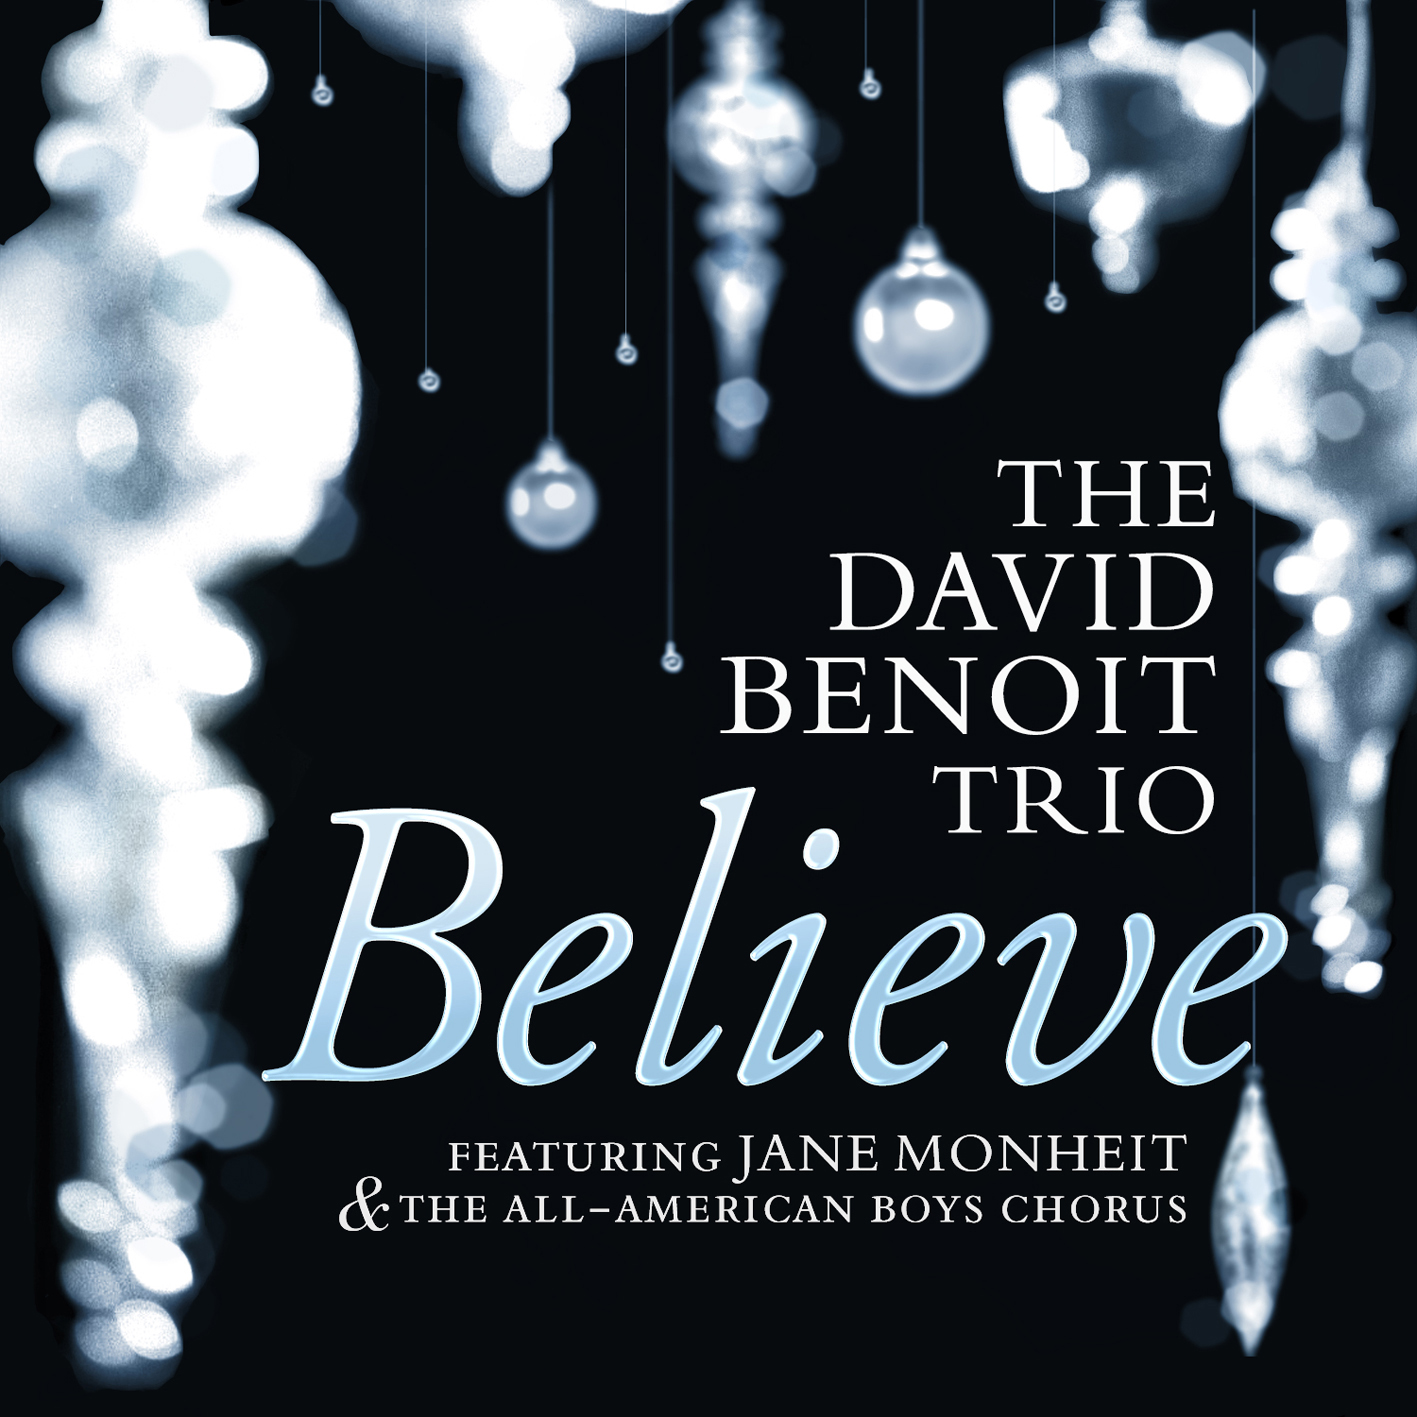 The David Benoit Trio feat. Jane Monheit - Believe (2015) [HDTracks FLAC 24bit/96kHz]